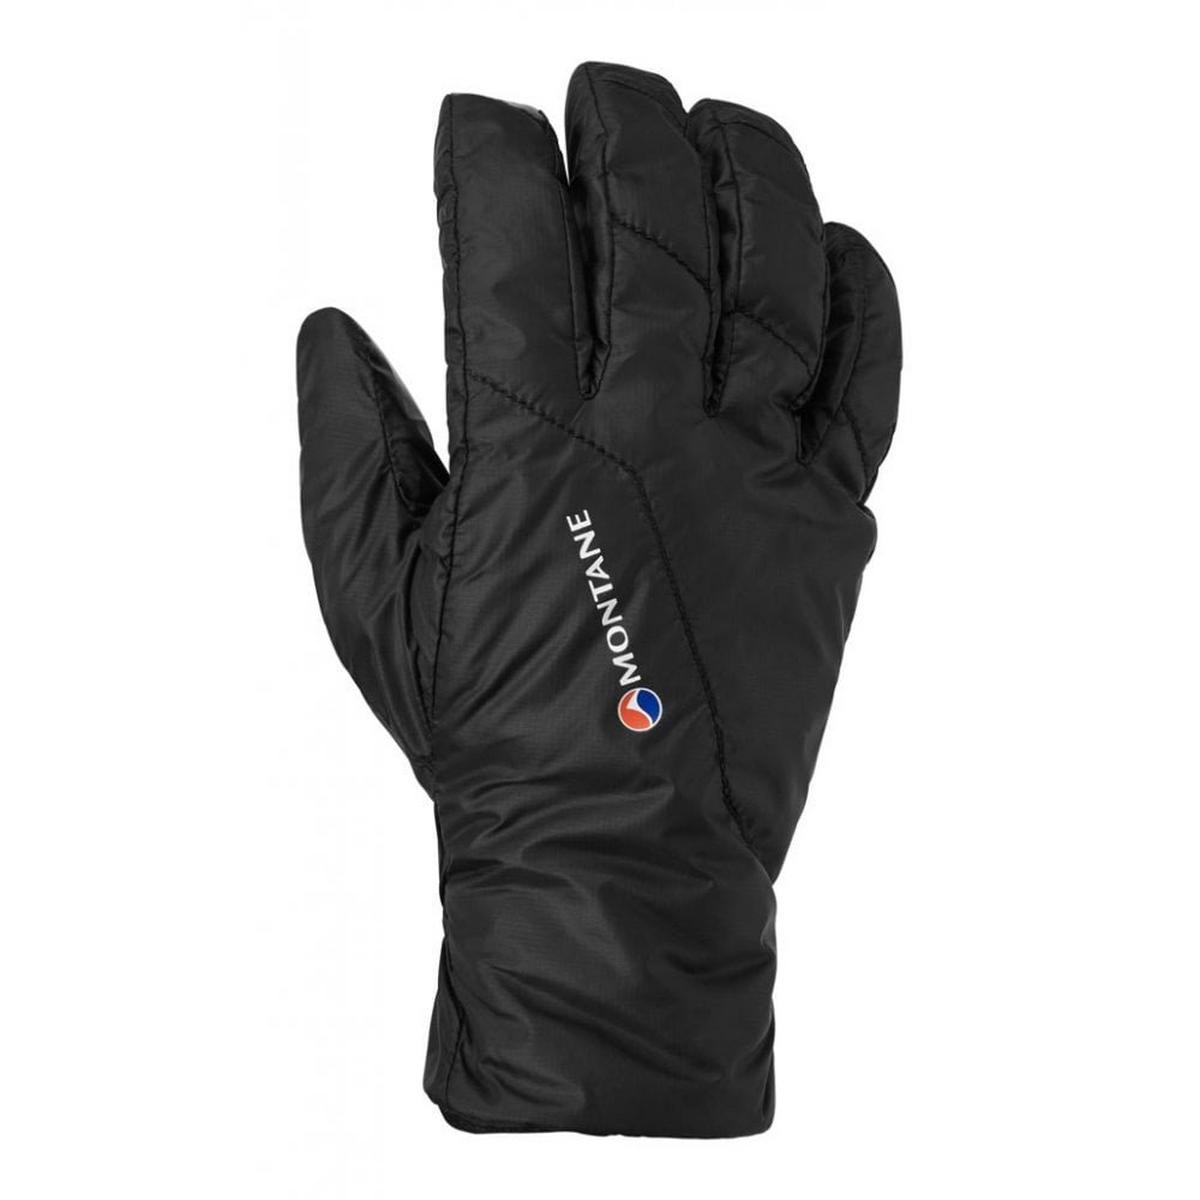 Montane Men's Prism Glove - Black